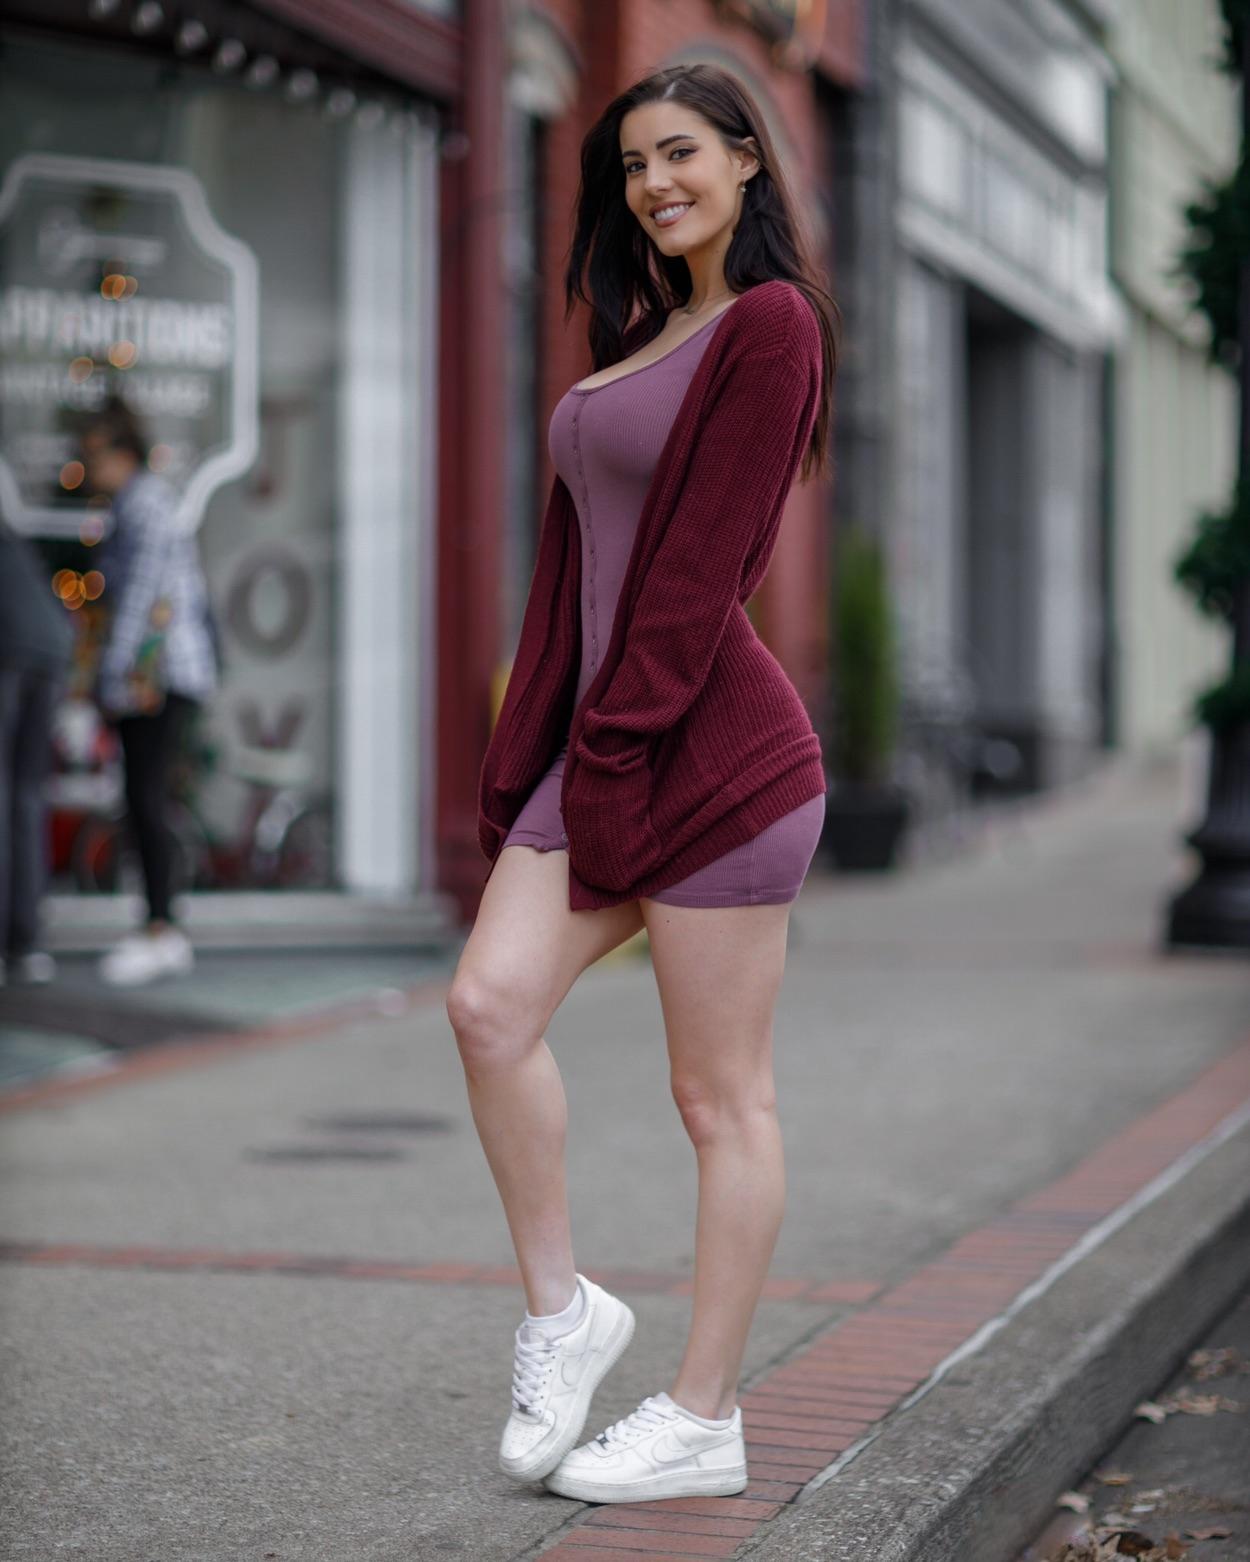 Erin Olash Sexy Tight Dress Photoshoot Leaked 7